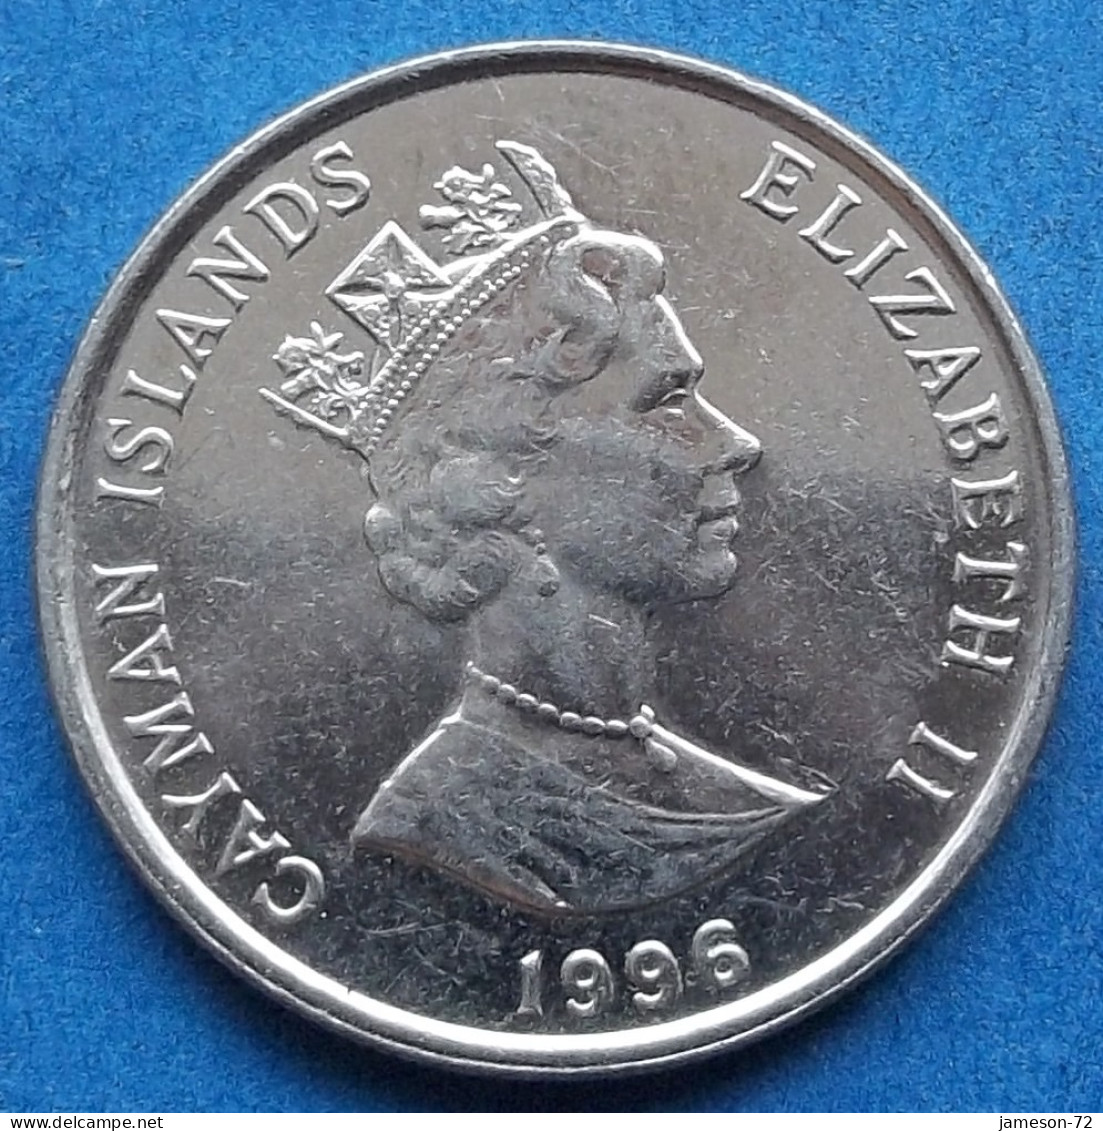 CAYMAN ISLANDS - 10 Cents 1996 "Green Turtle" KM# 89a Elizabeth II Decimal Coinage (1952-2022) - Edelweiss Coins - Cayman Islands